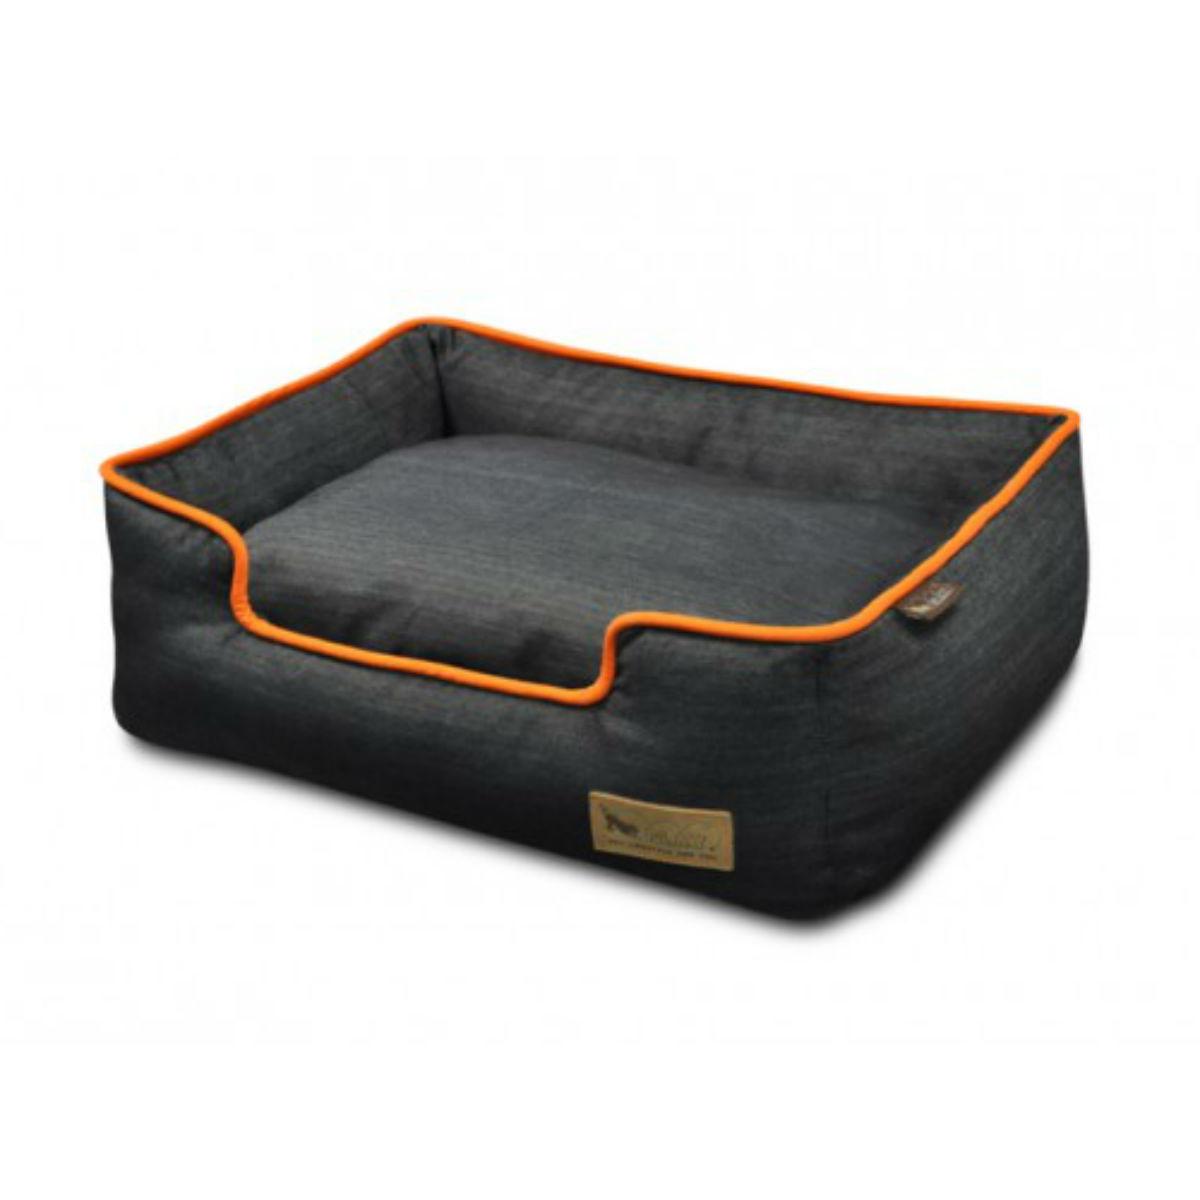 P.L.A.Y. Urban Denim Lounge Dog Bed - Medieval Blue and Mandarin Orange